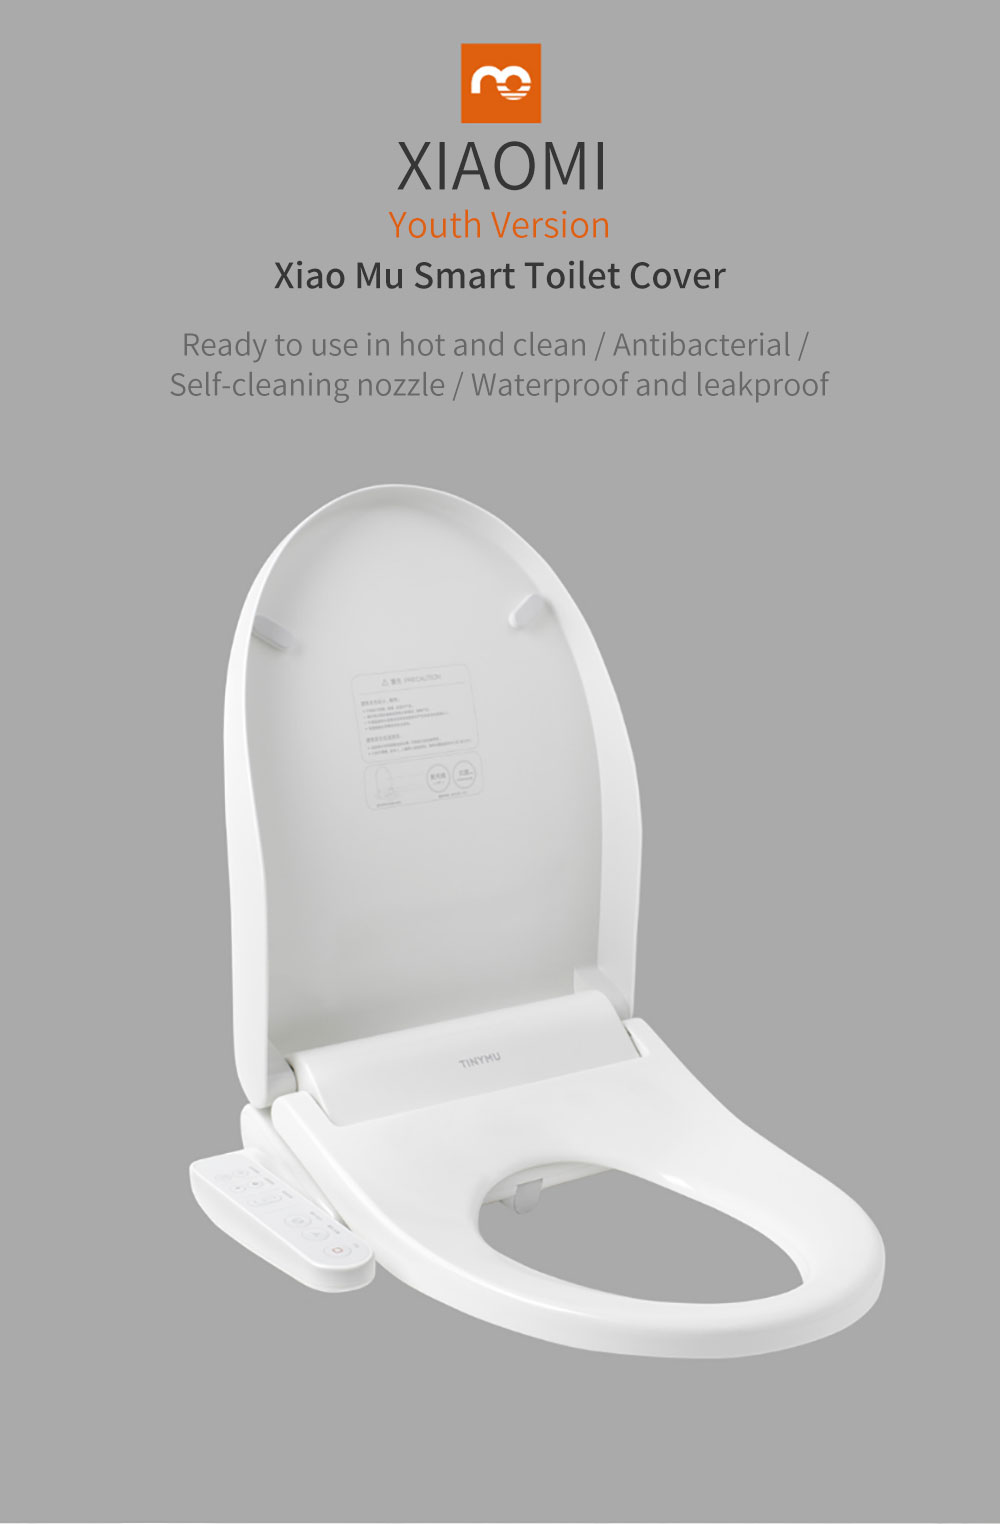 Deska klozetowa XIAOMI Youth Version Xiao Mu Smart Toilet Seat za $174.99 / ~651zł